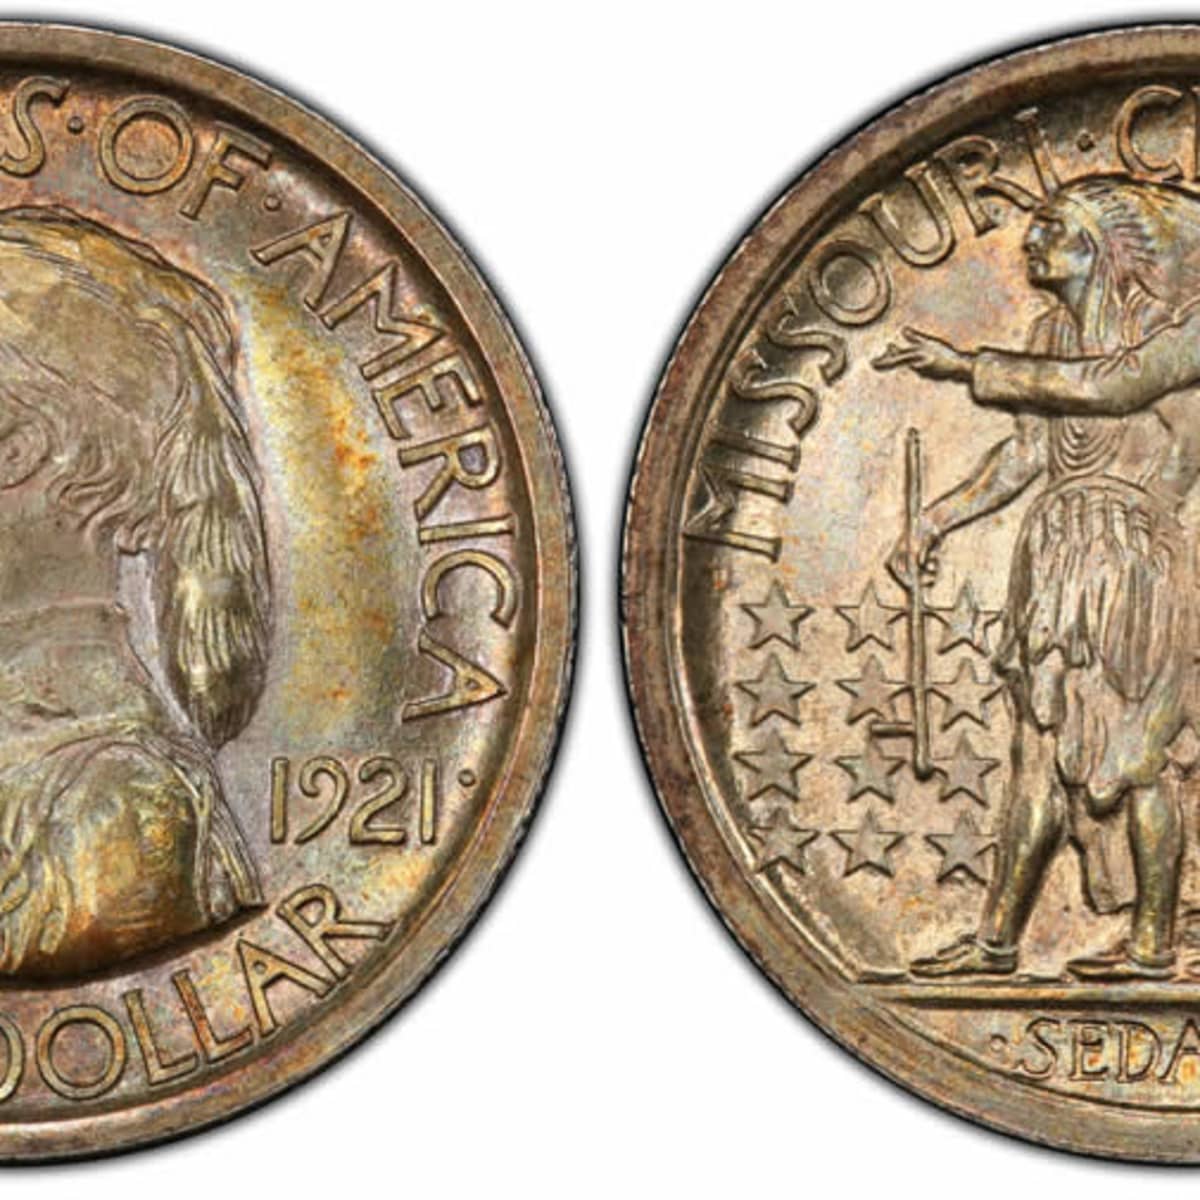 us commemorative coin mintages